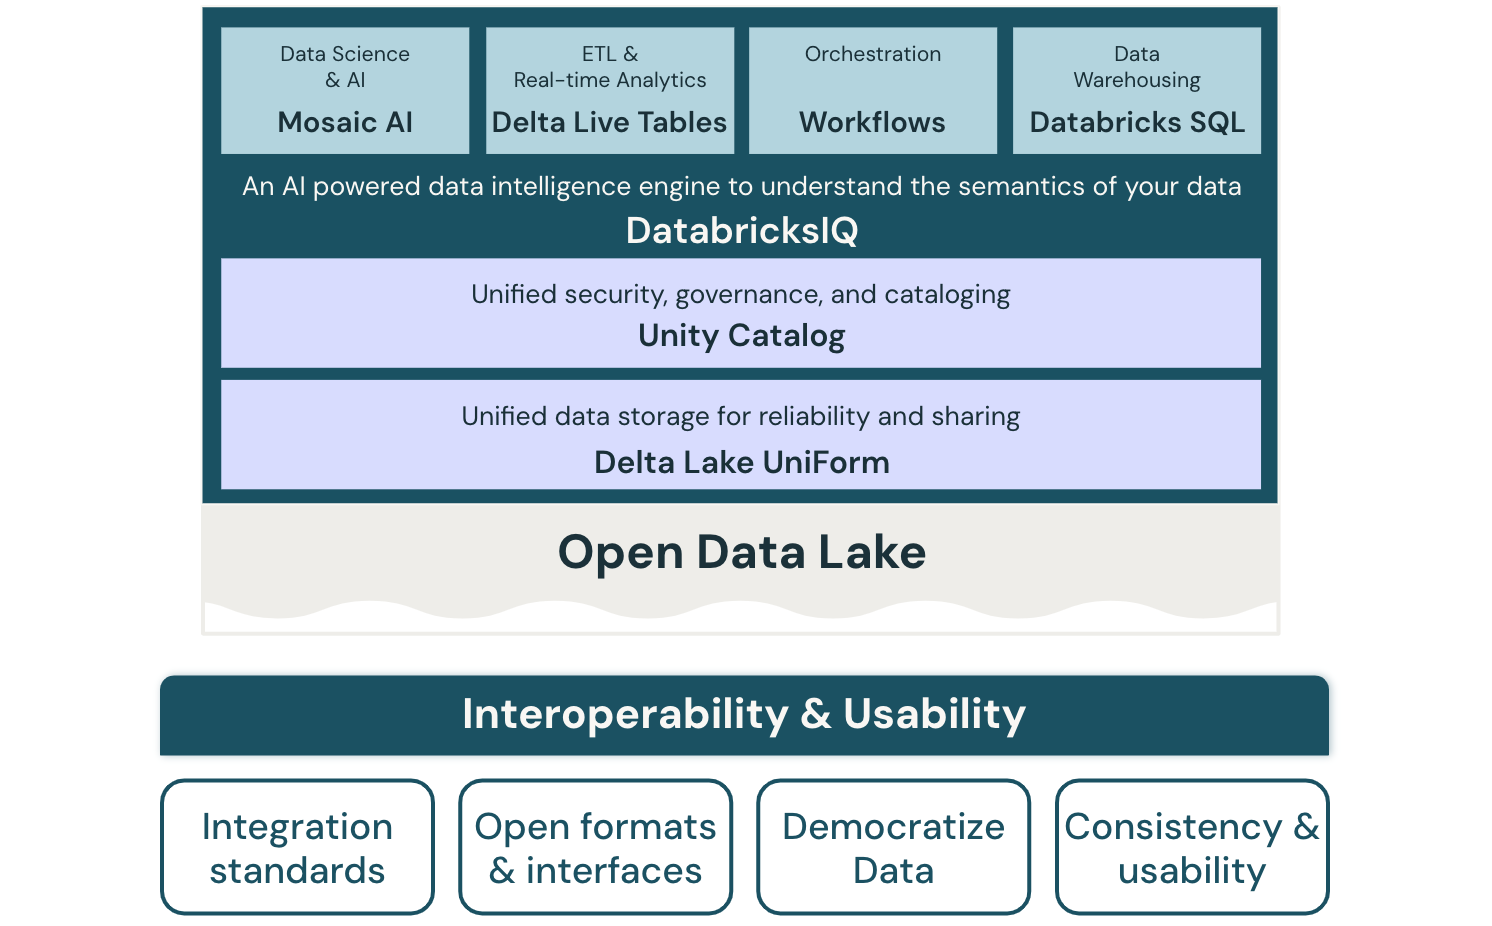 Interoperability and usability lakehouse architecture diagram for Databricks.